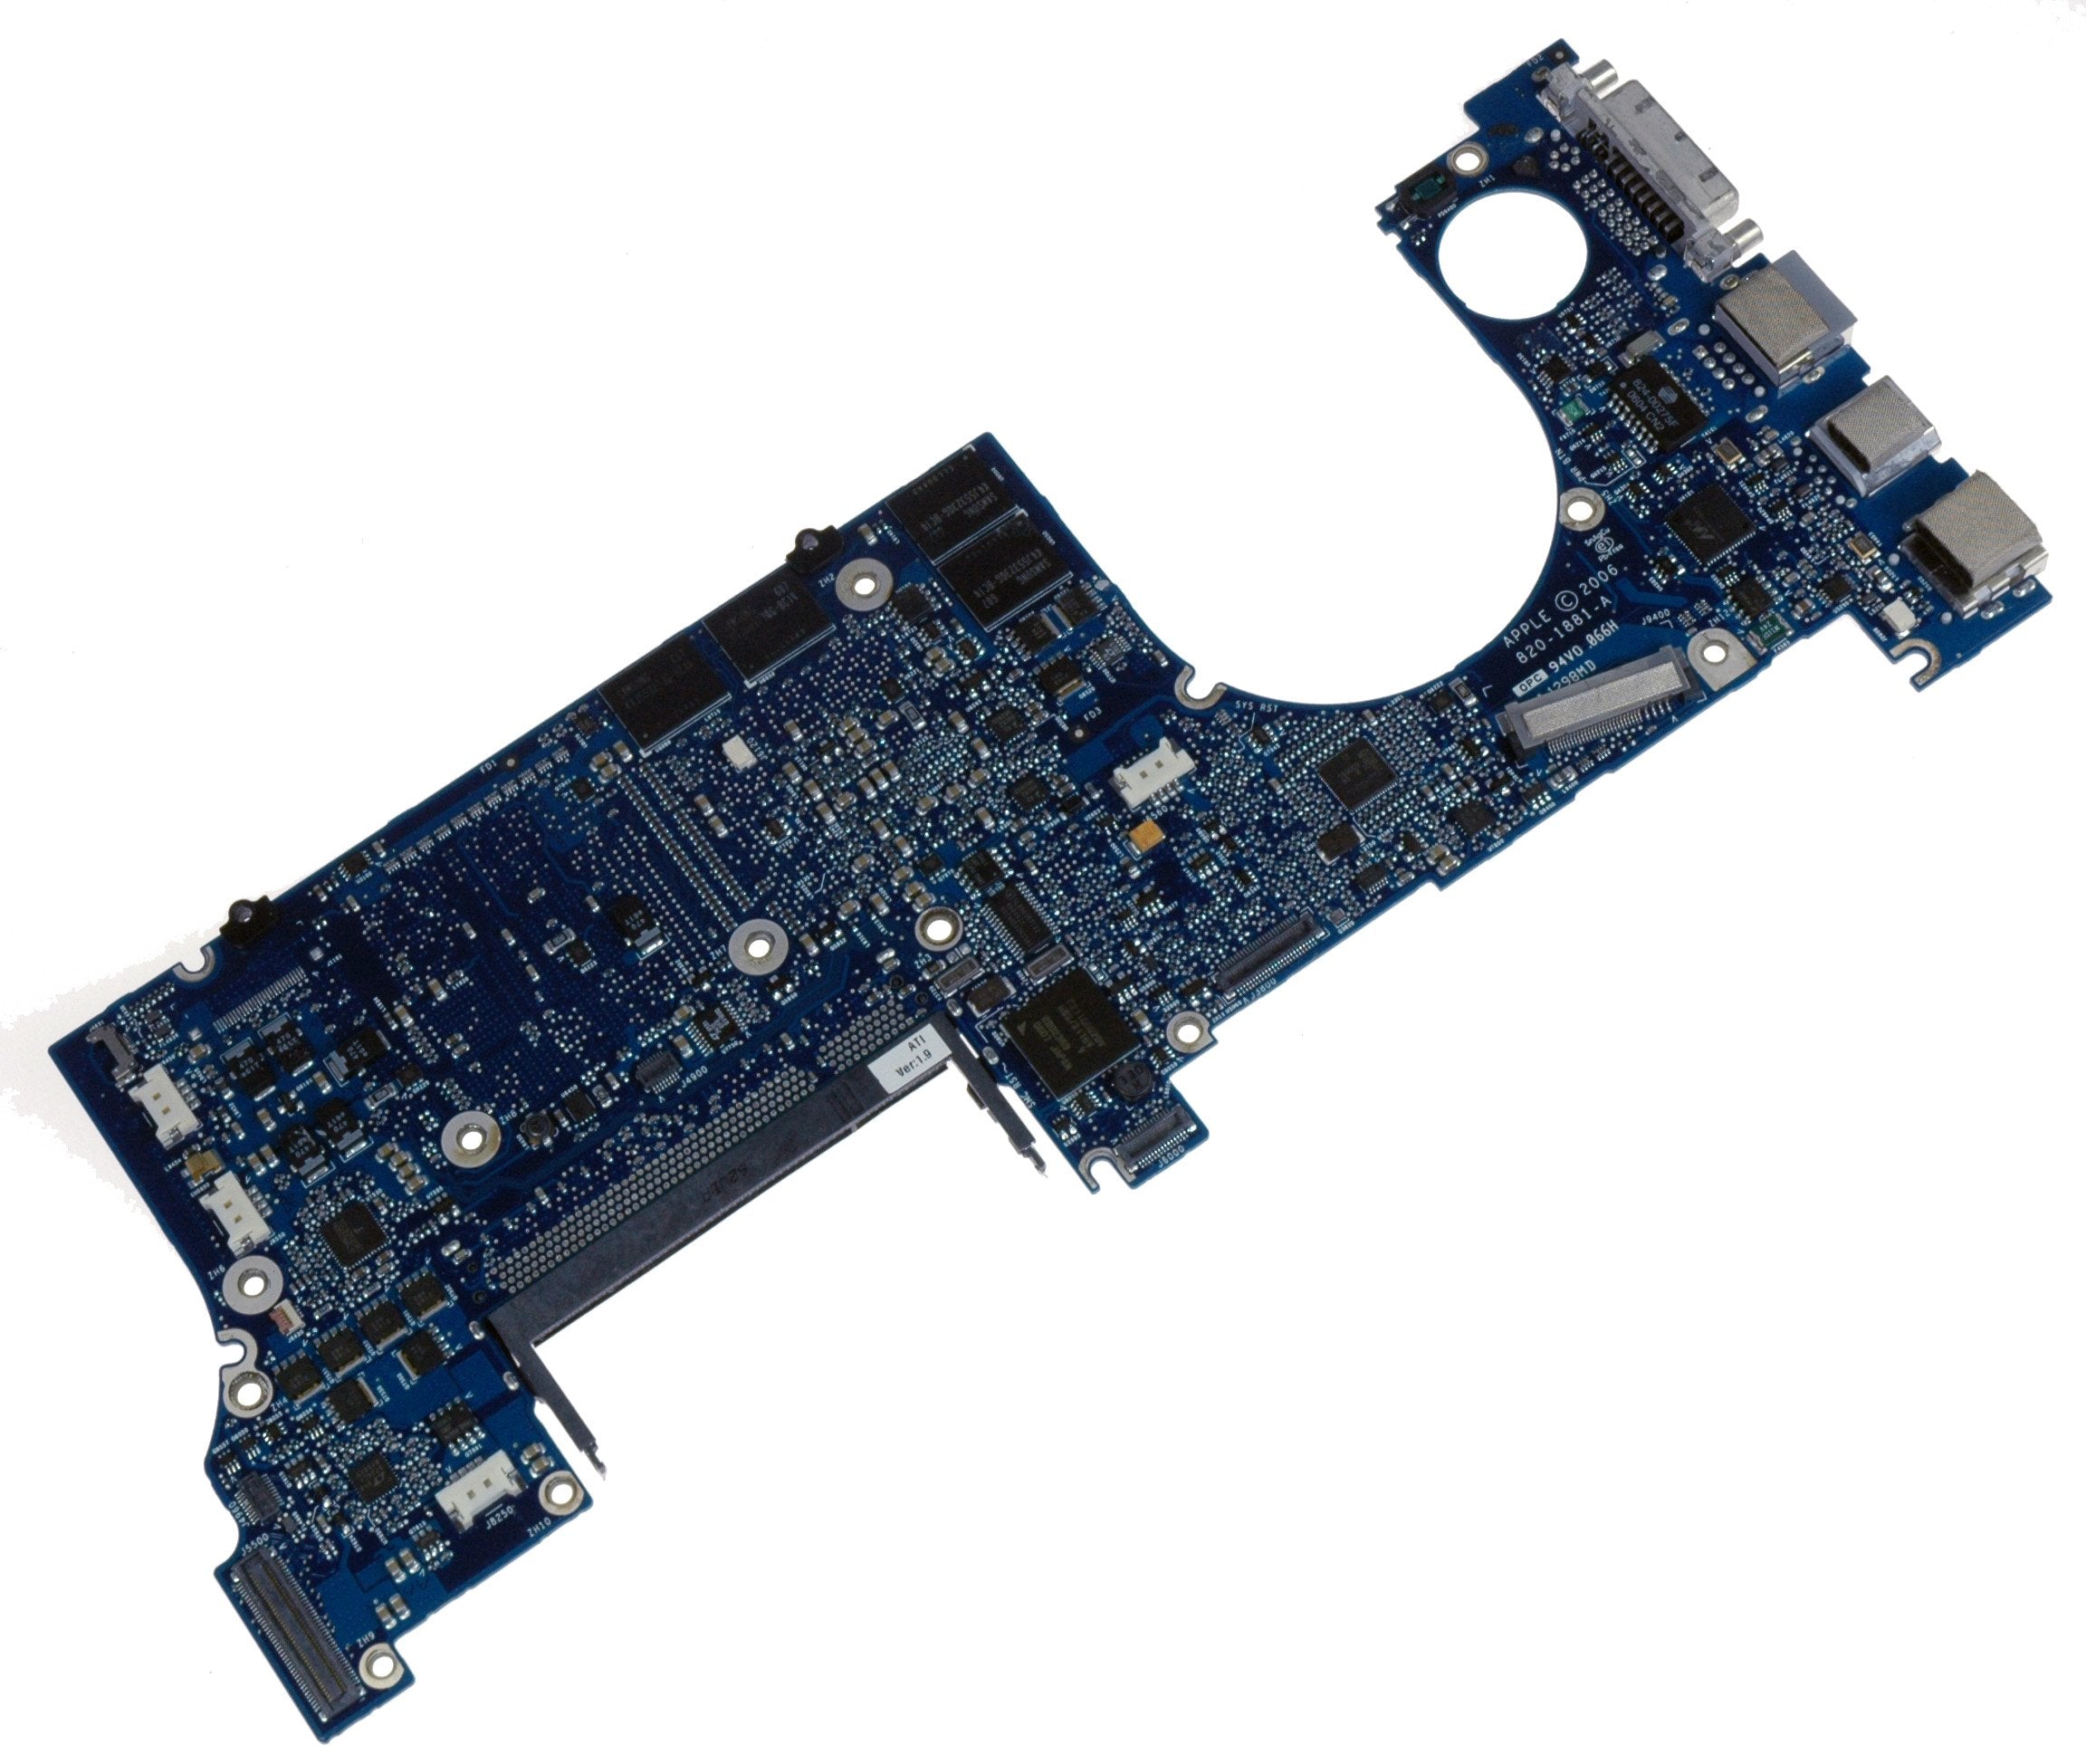 MacBook Pro 15" (Model A1150) 1.83 GHz Logic Board